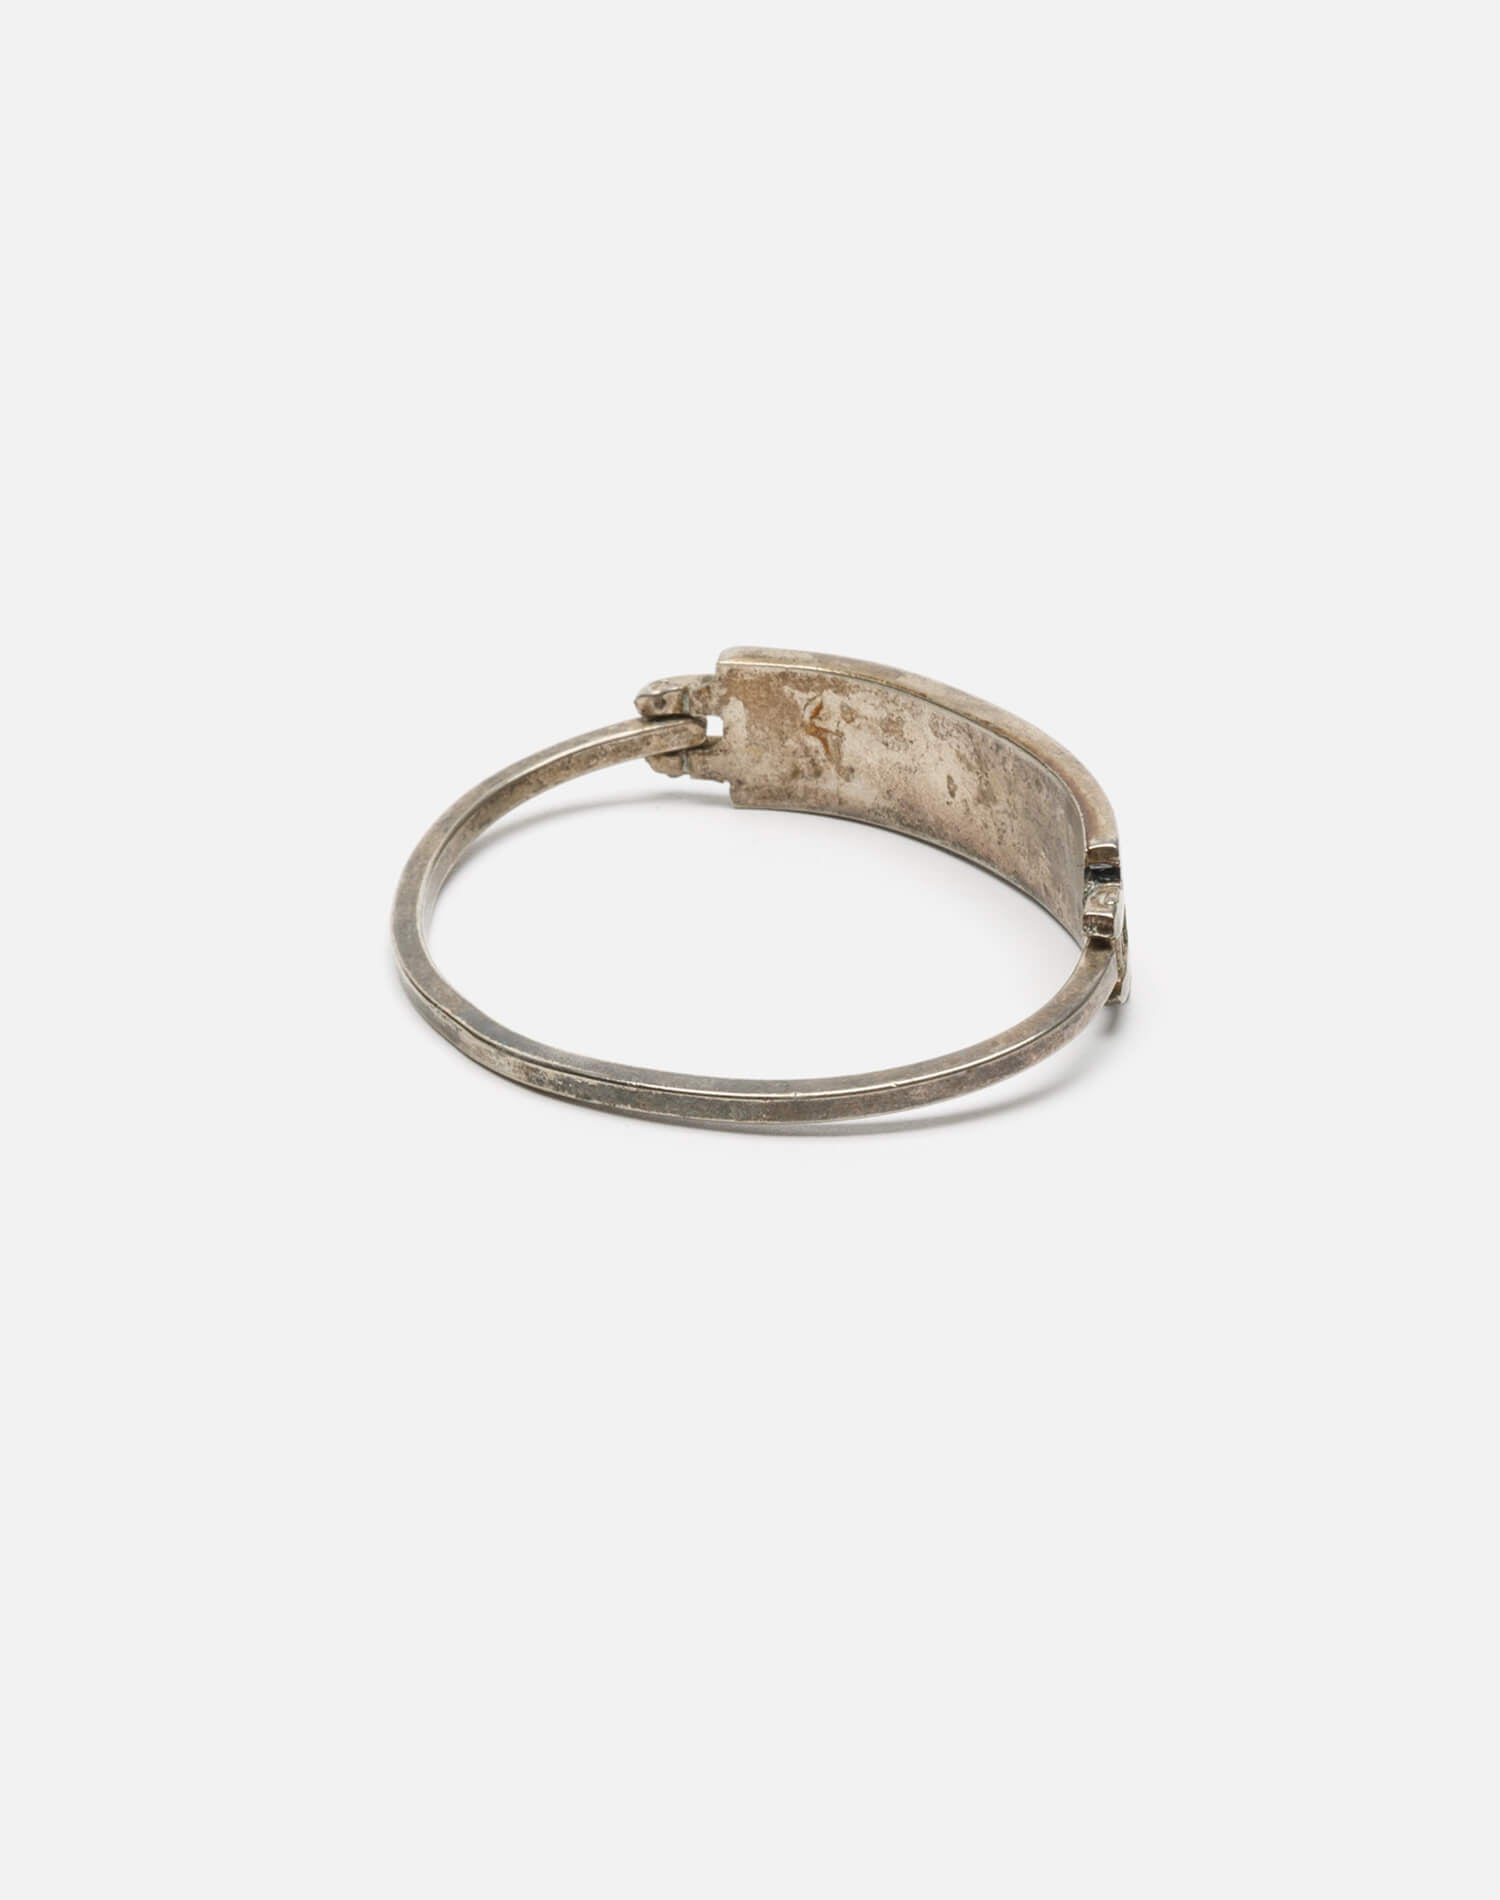 60s Inlaid Modernist Bracelet - #24